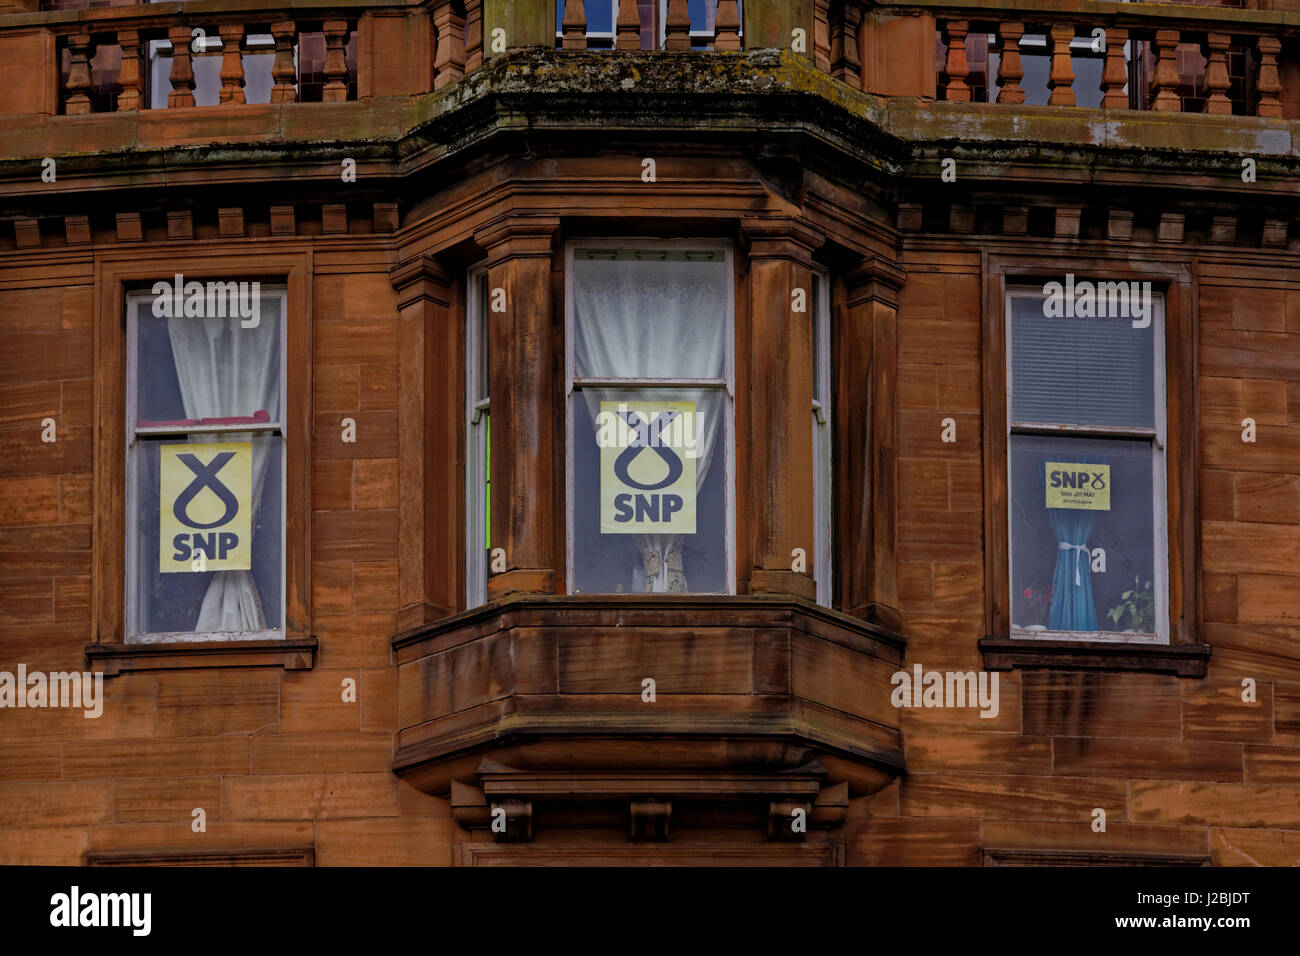 SNP Snp schottische nationalistische Partei Logo Poster in sehr gehobenen Mittelklasse-Fenster Stockfoto